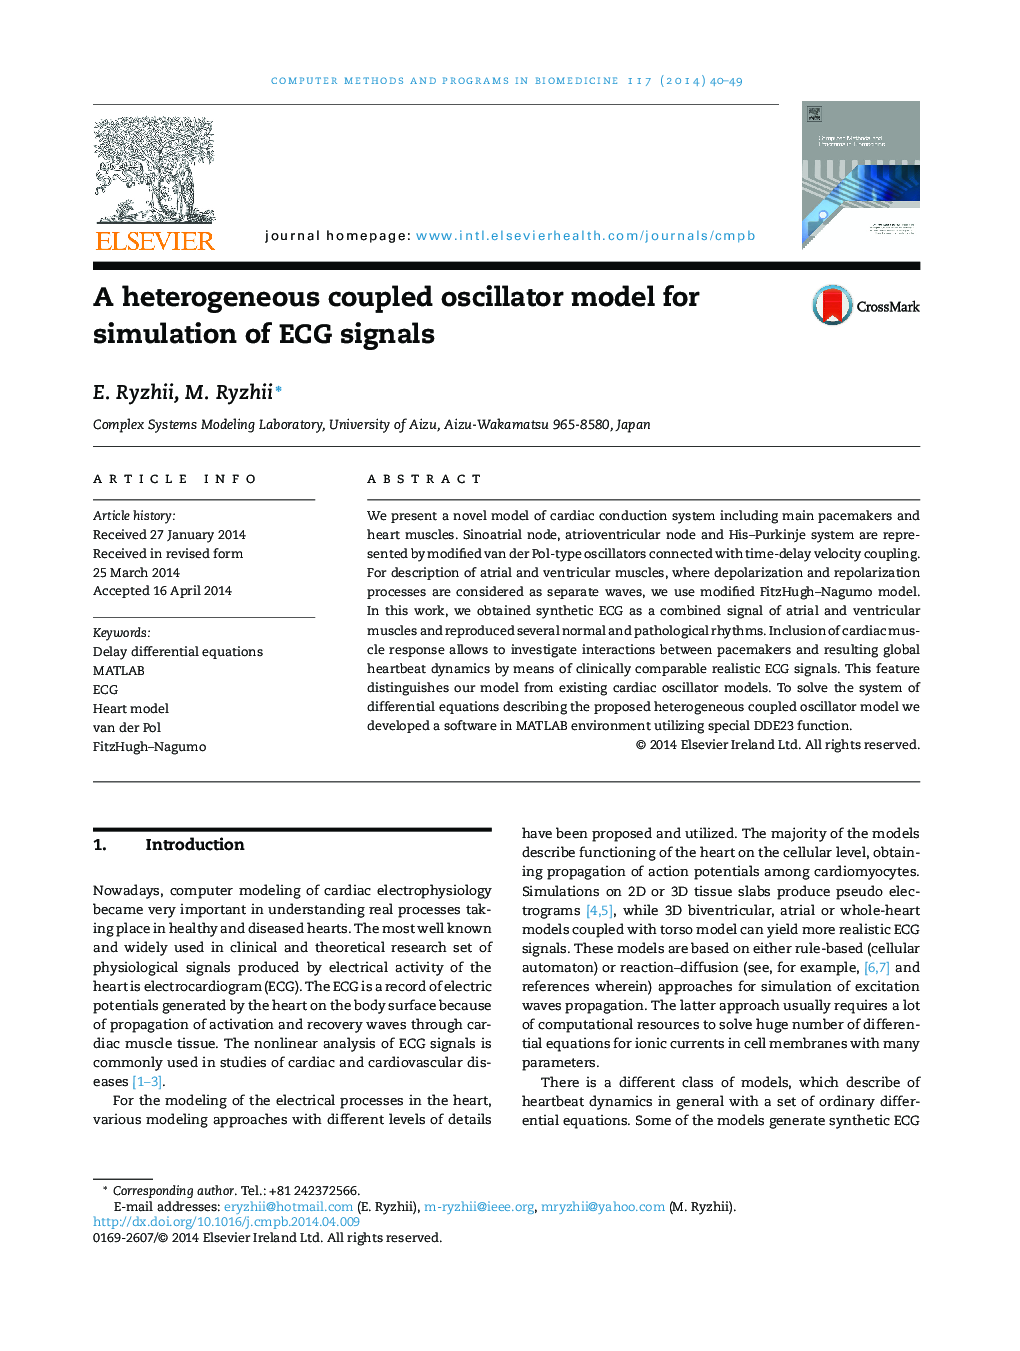 A heterogeneous coupled oscillator model for simulation of ECG signals